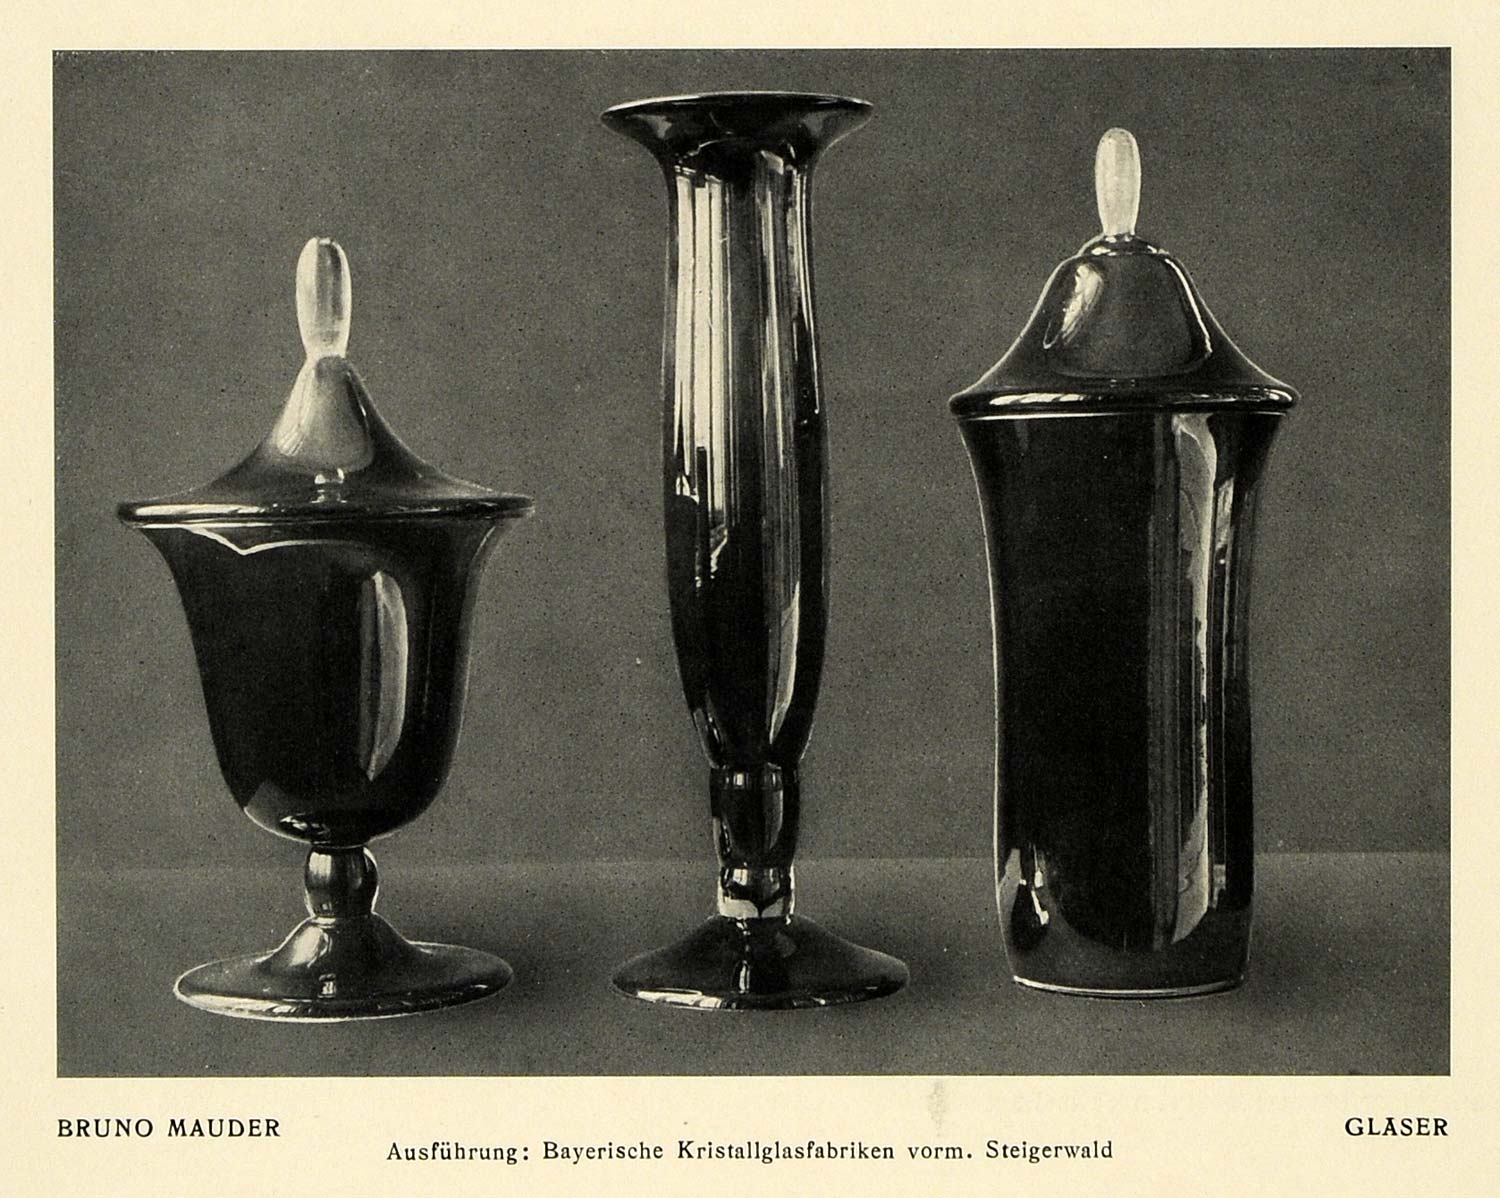 1915 Print Glasses Cups Crystal Work Mauder Vase Art Bruno Mauder Ceramic DKU1